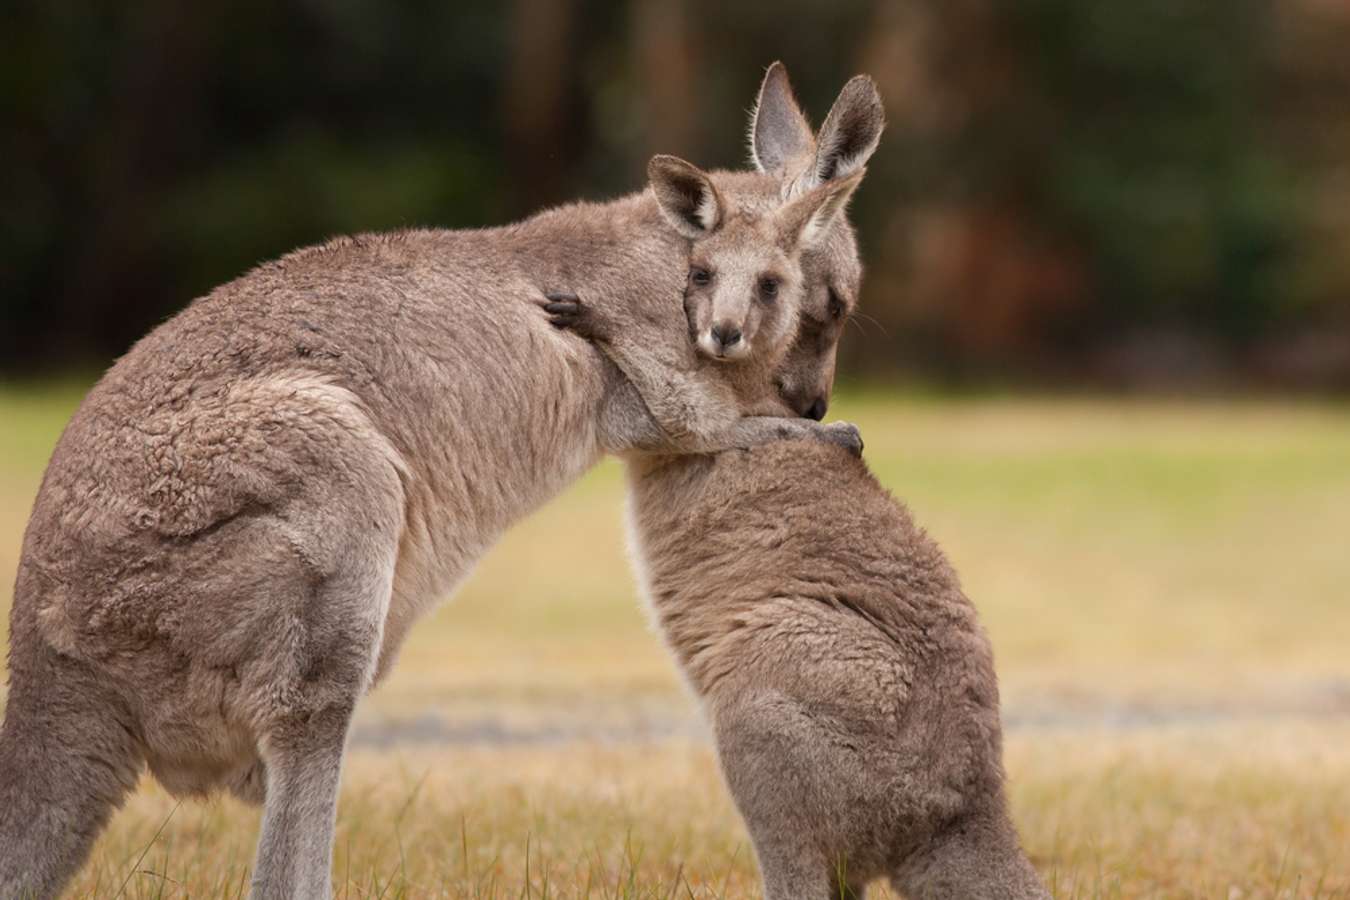 Australia's cute kangaroos